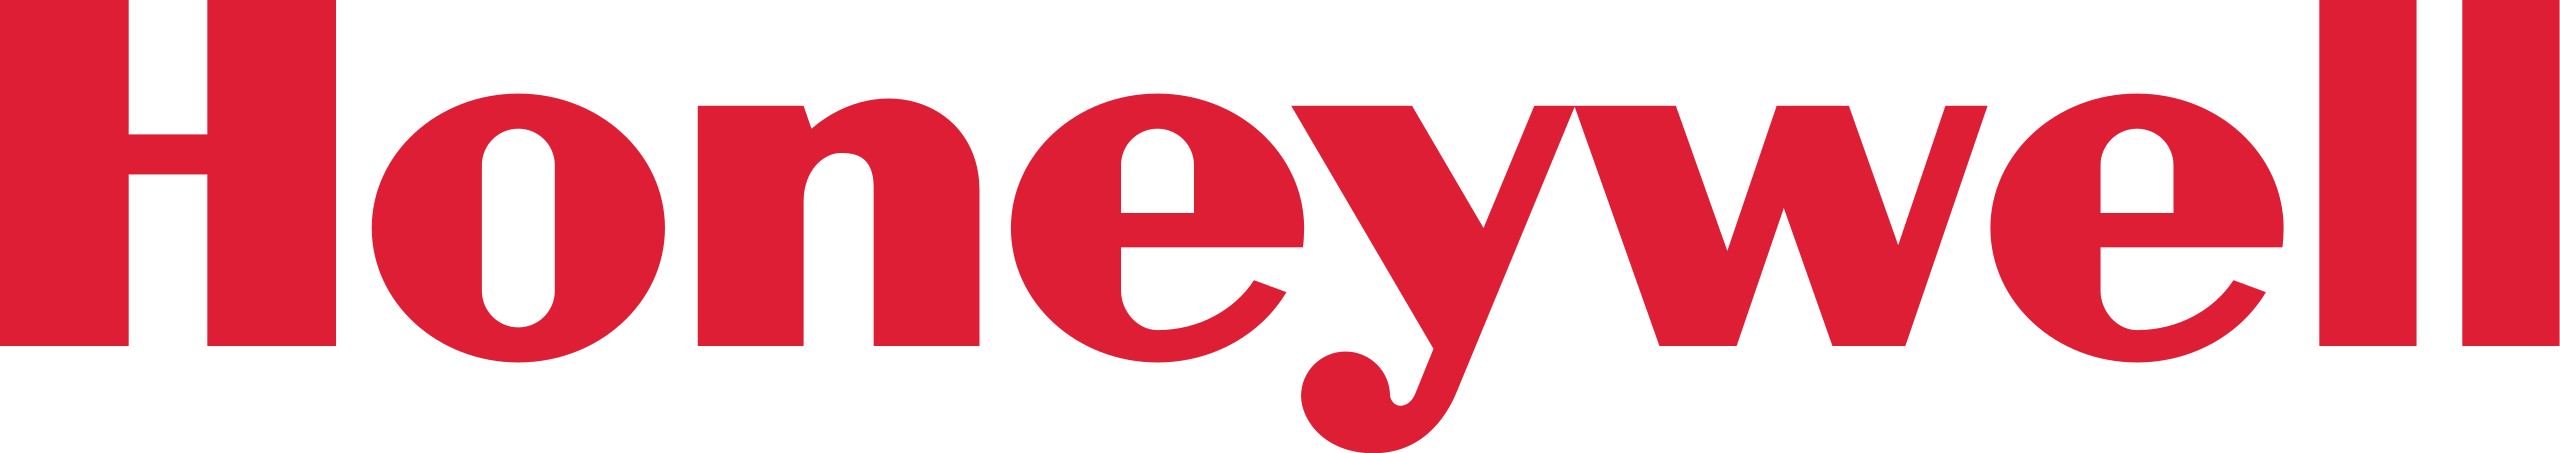 2560px-Honeywell_logo